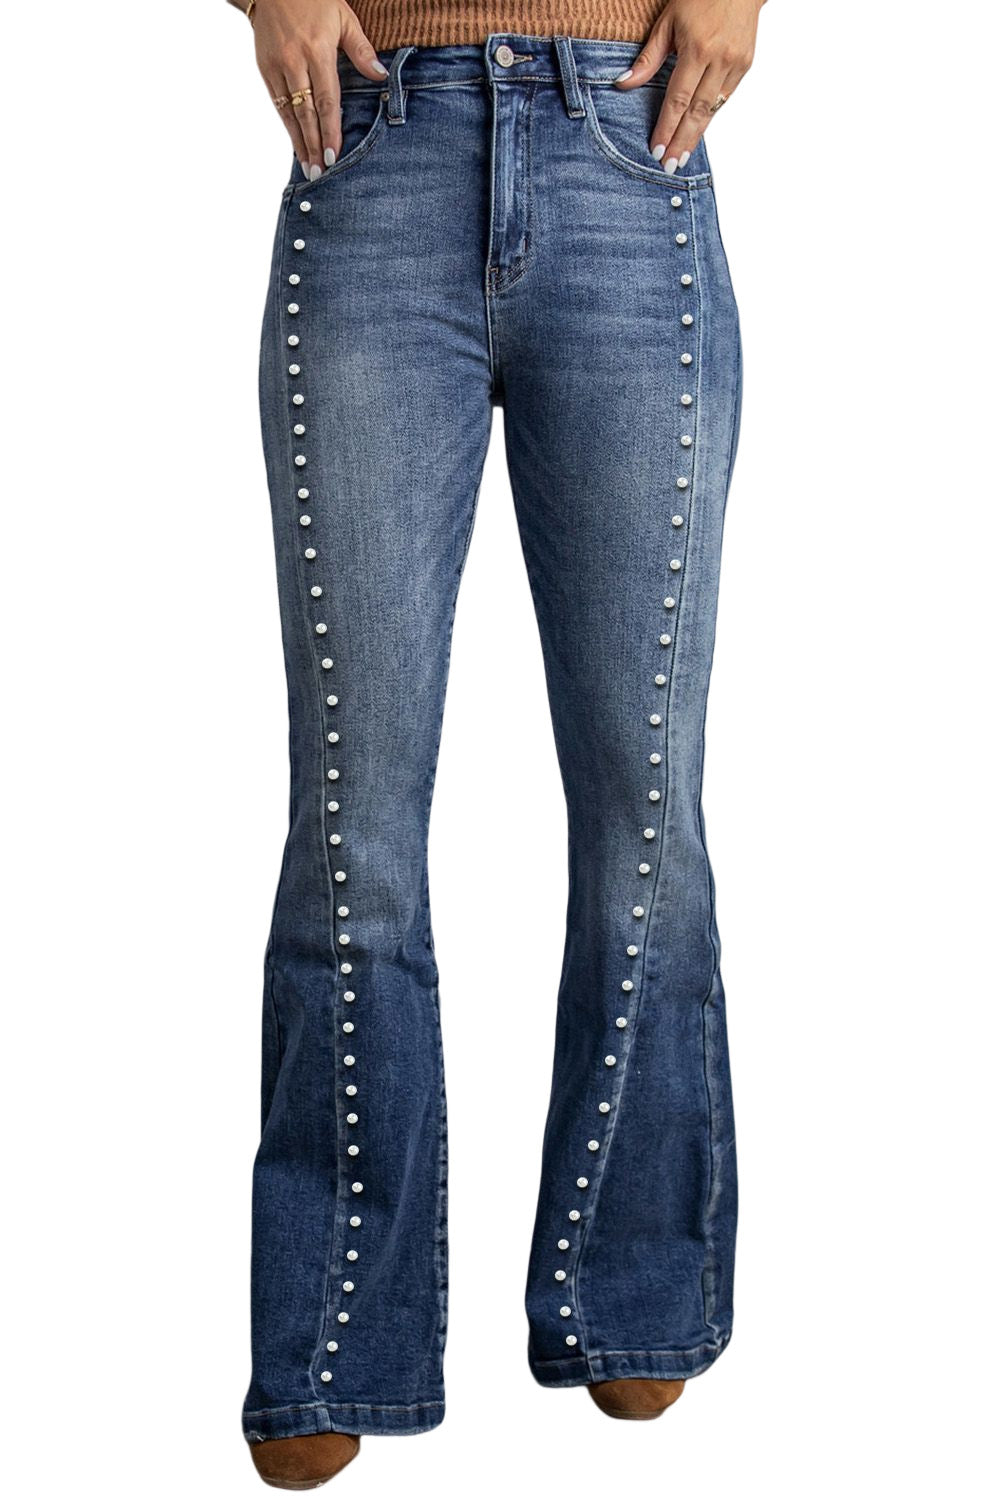 Blue Beading Light Wash High Waist Flare Jeans Graphic Pants JT's Designer Fashion